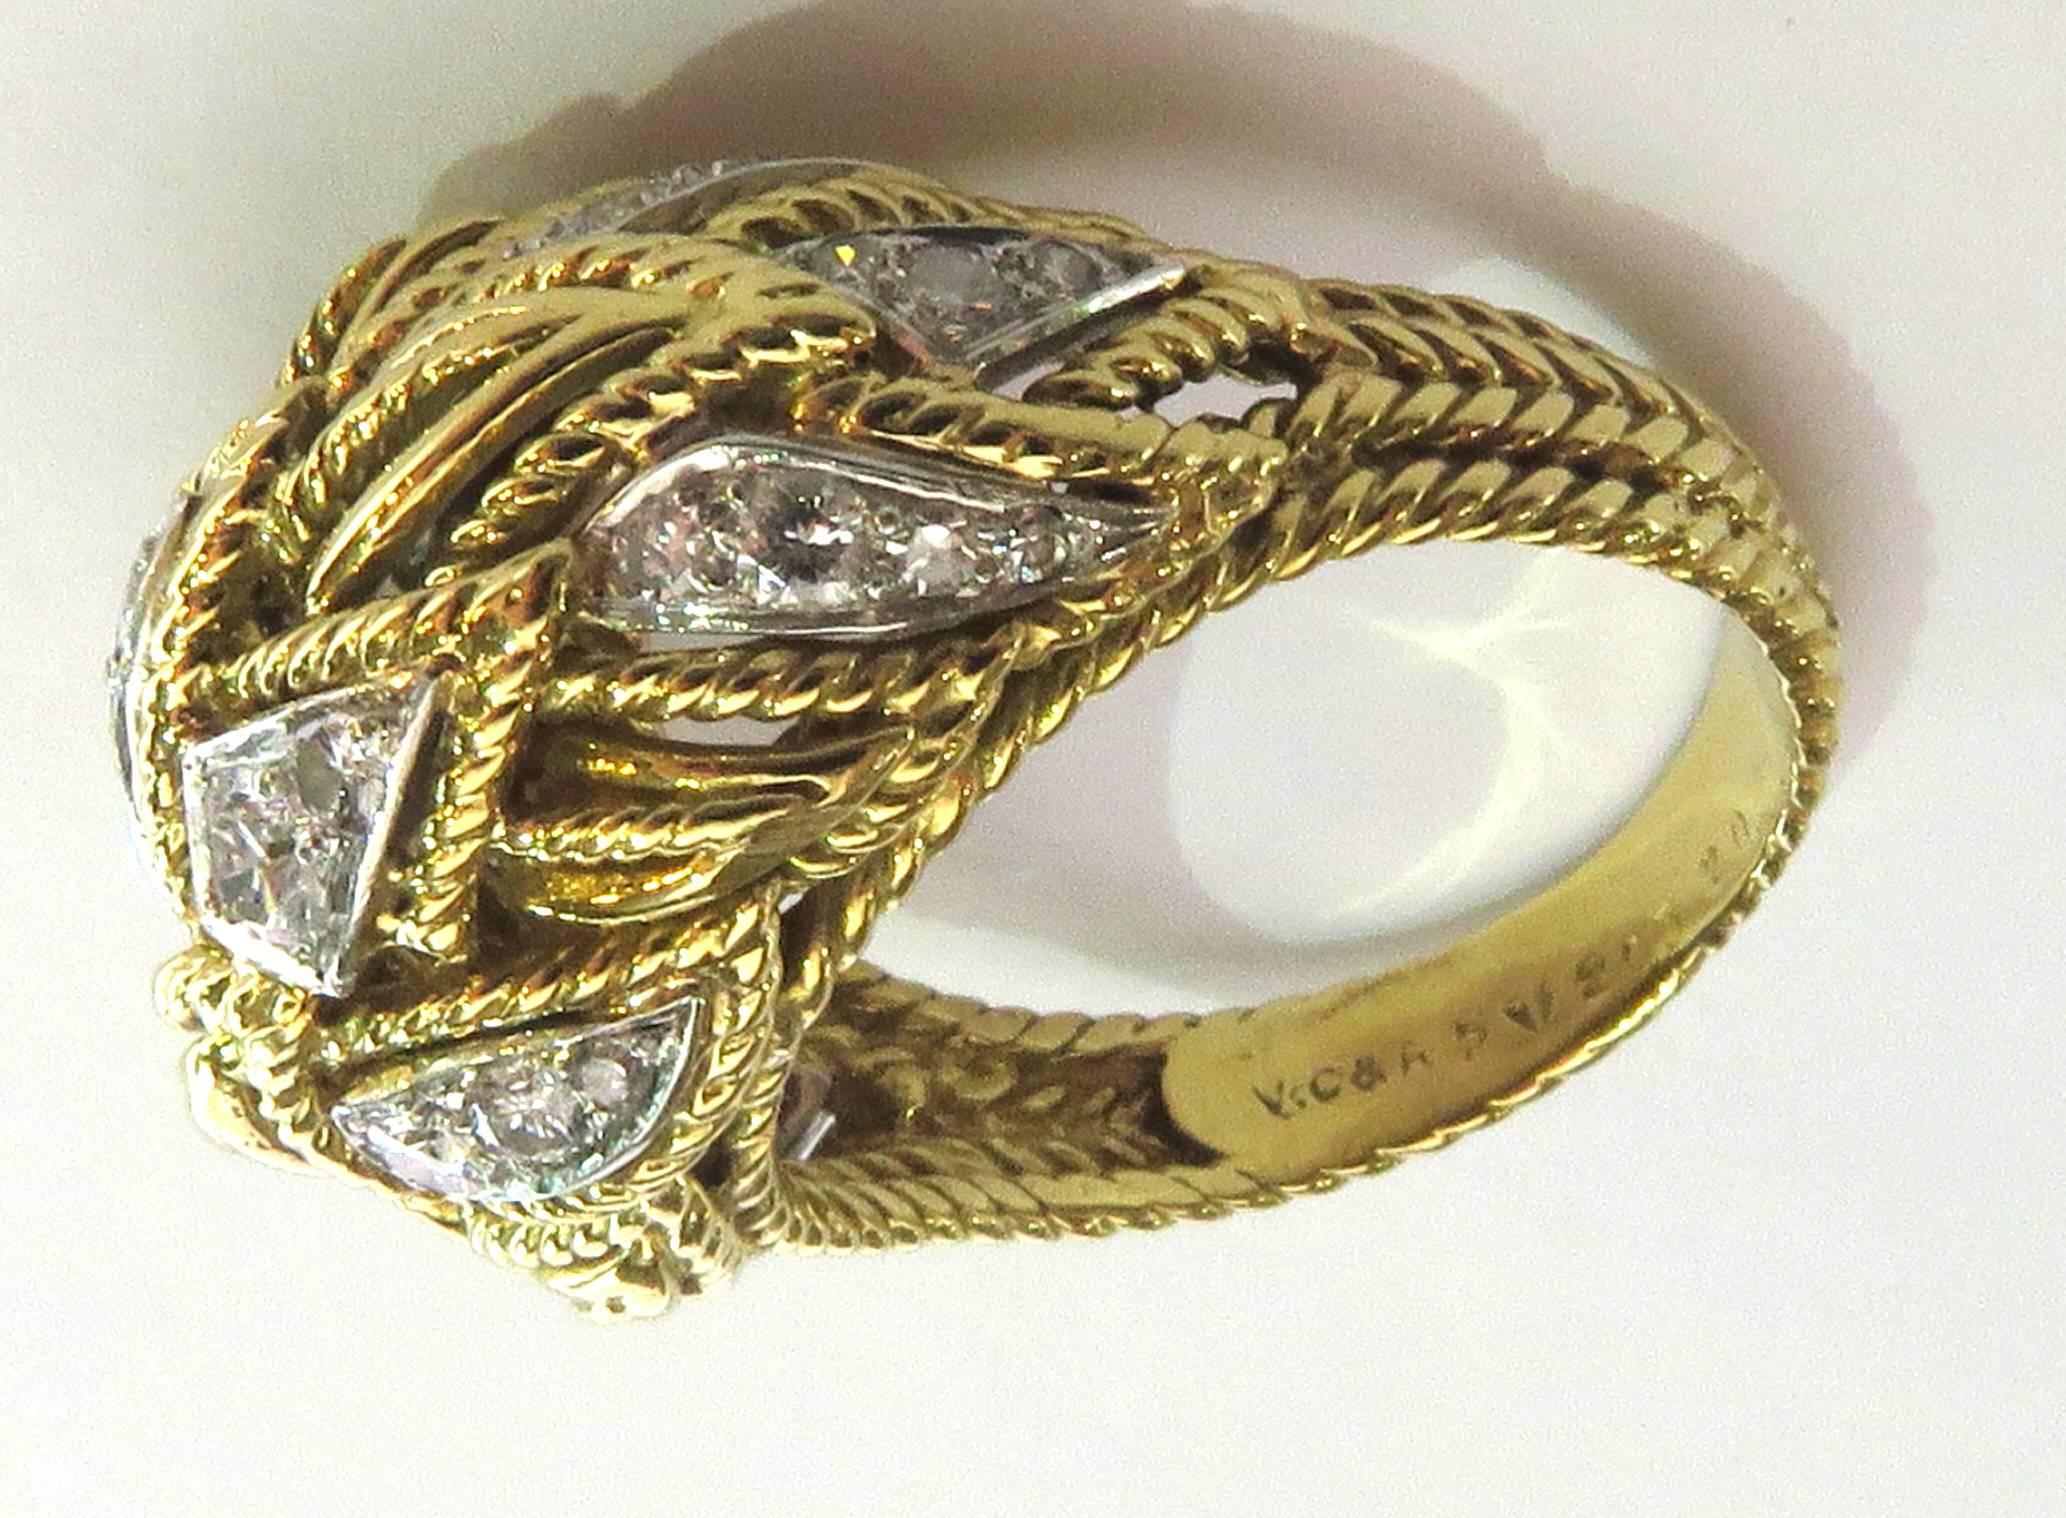 Timeless Van Cleef & Arpels Diamonds in Woven Leaf Design Gold Domed Ring 5